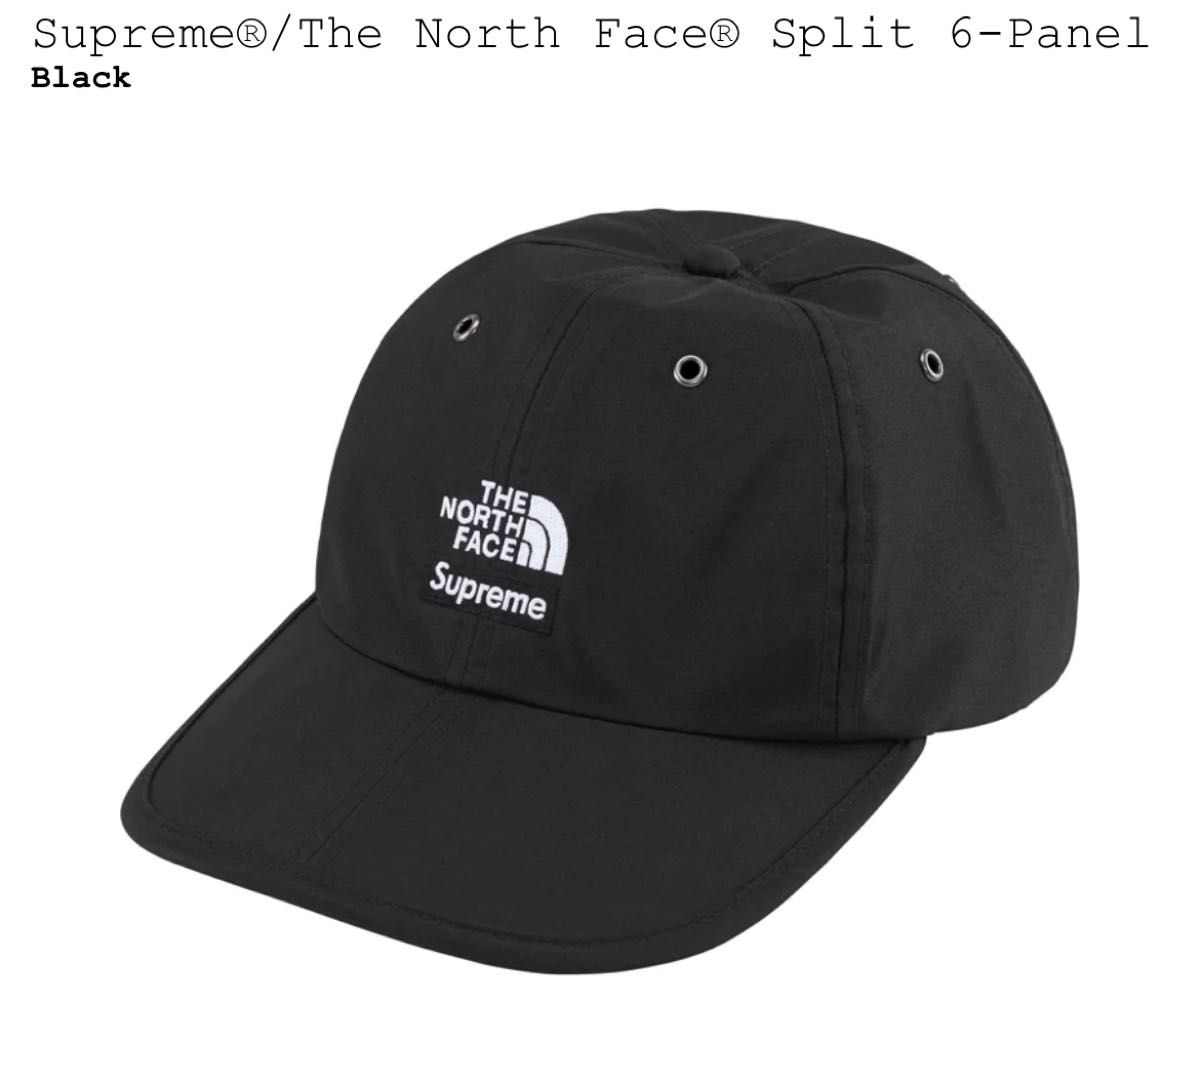 Supreme x The North Face Split 6-Panel キャップ 帽子 ノース 